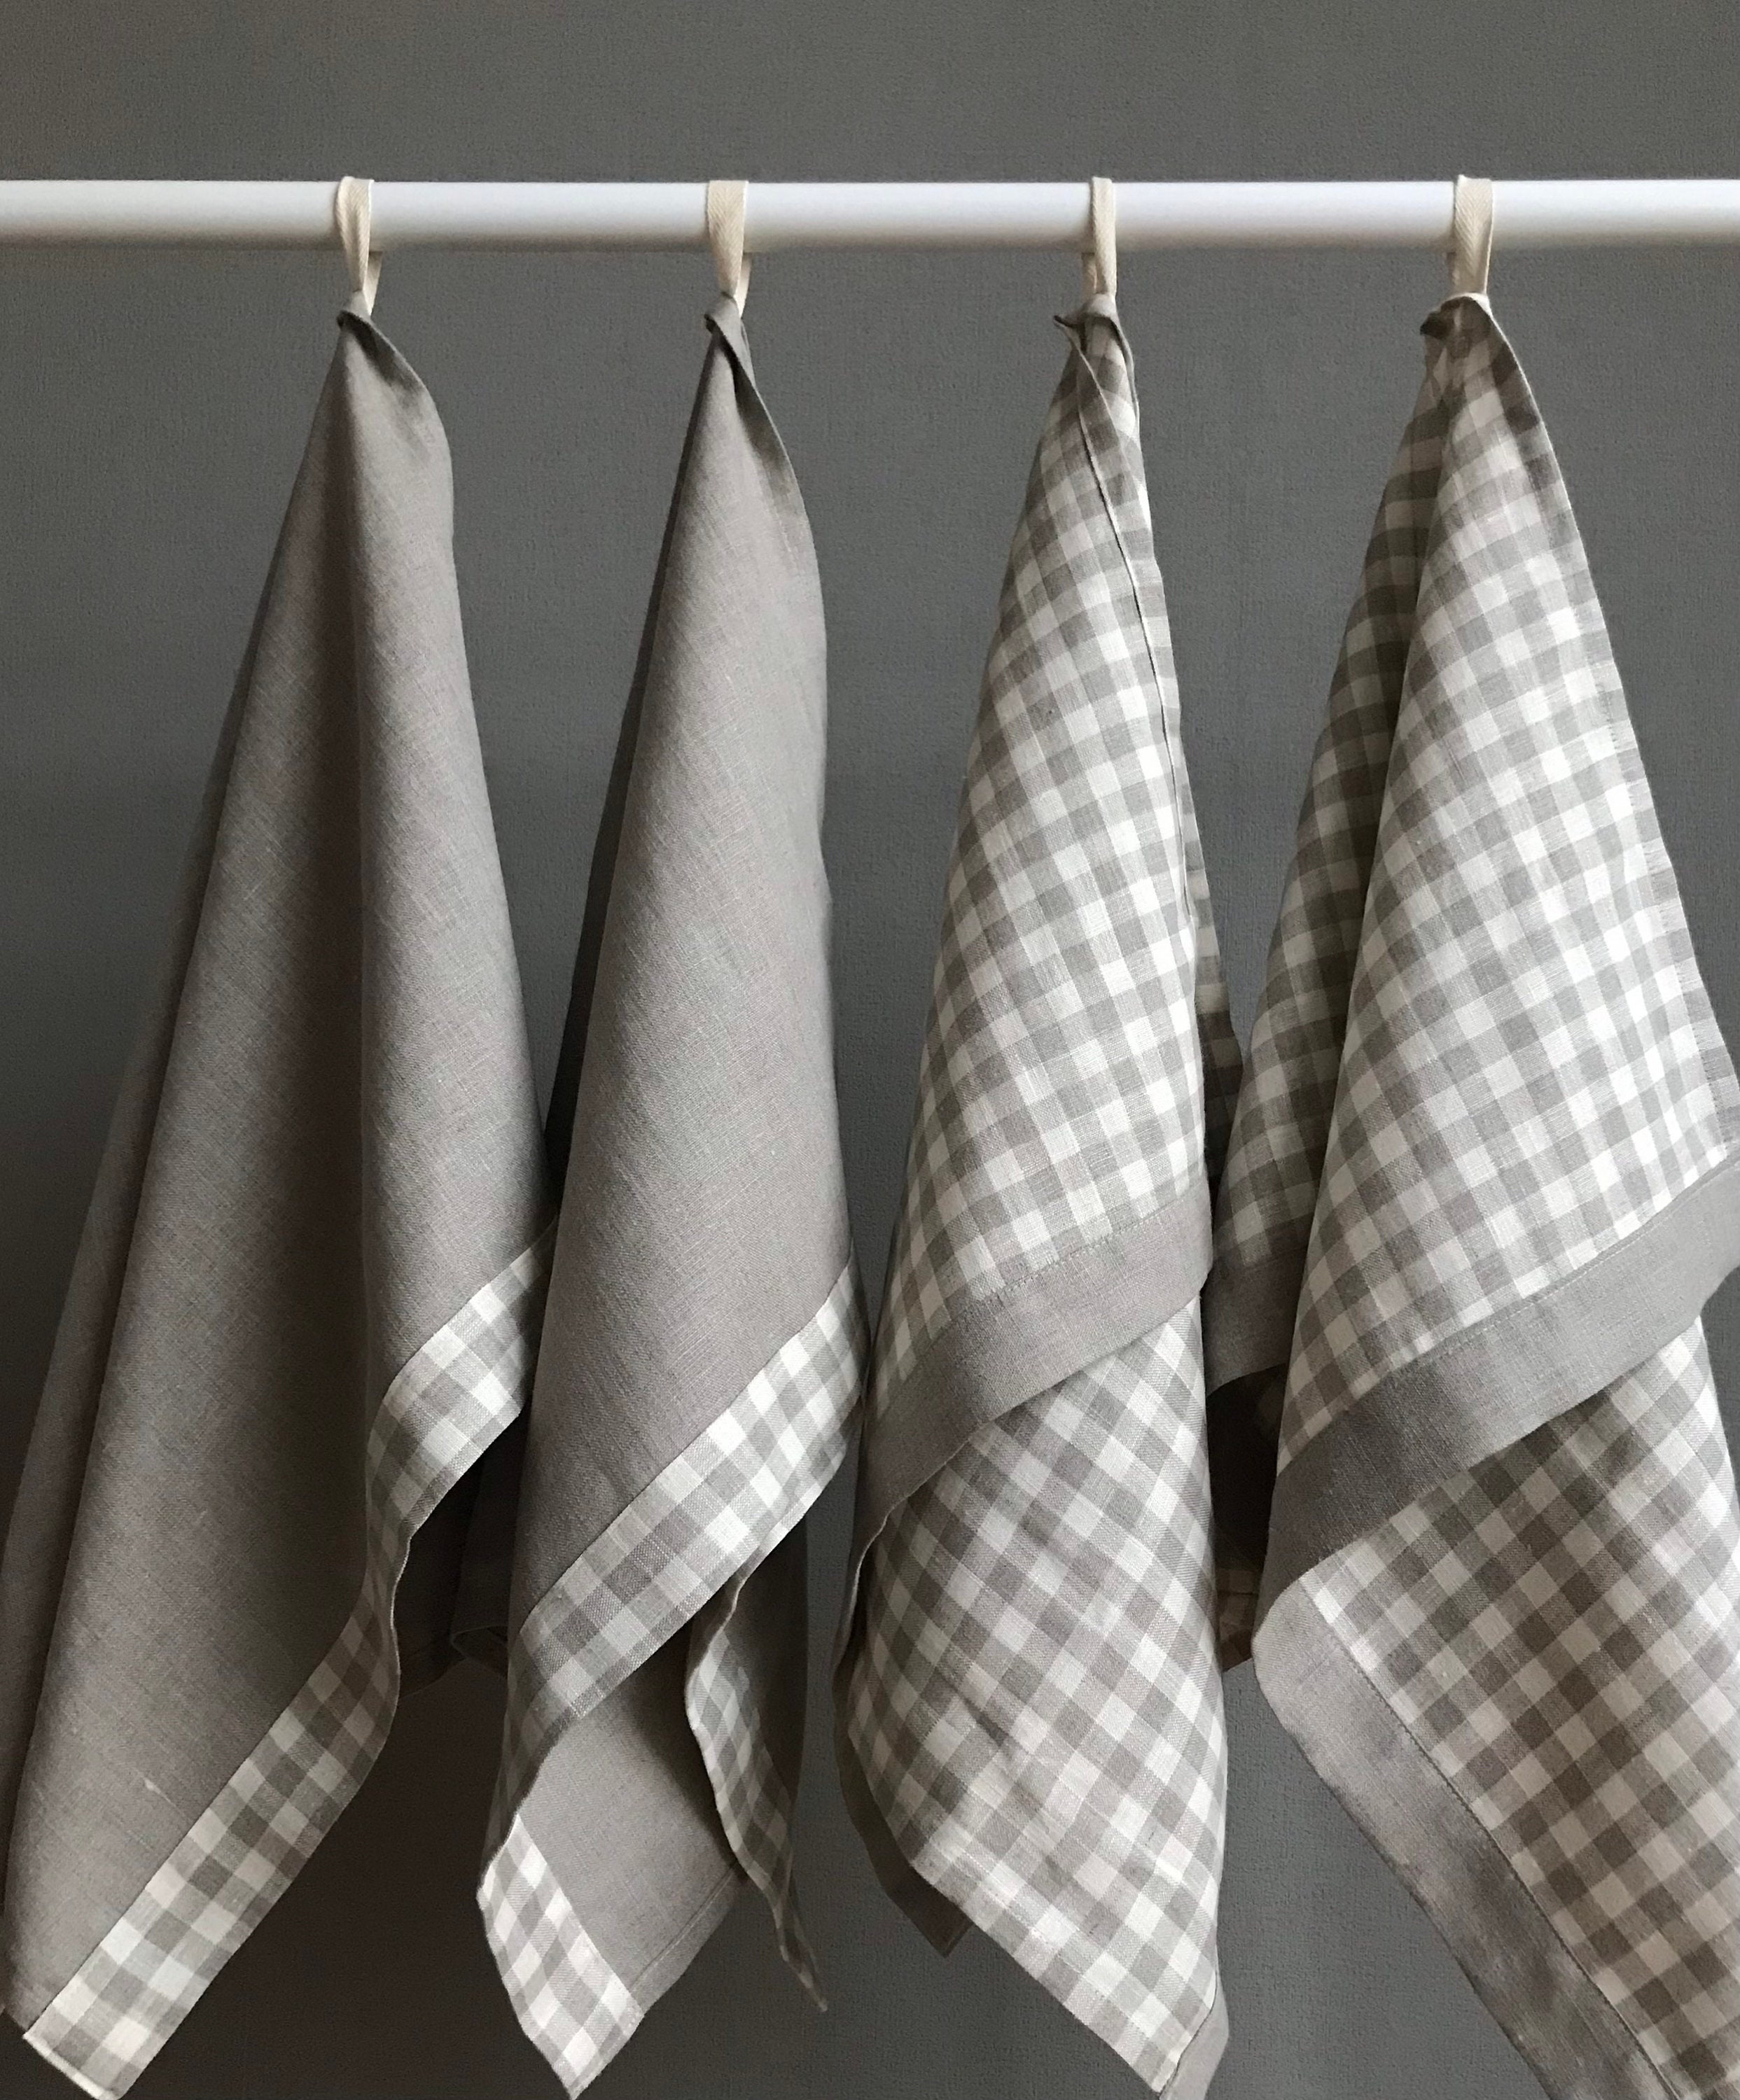 Linen Kitchen Gift Towels. Eco Tea Towel. Soft Linen Hand Towel